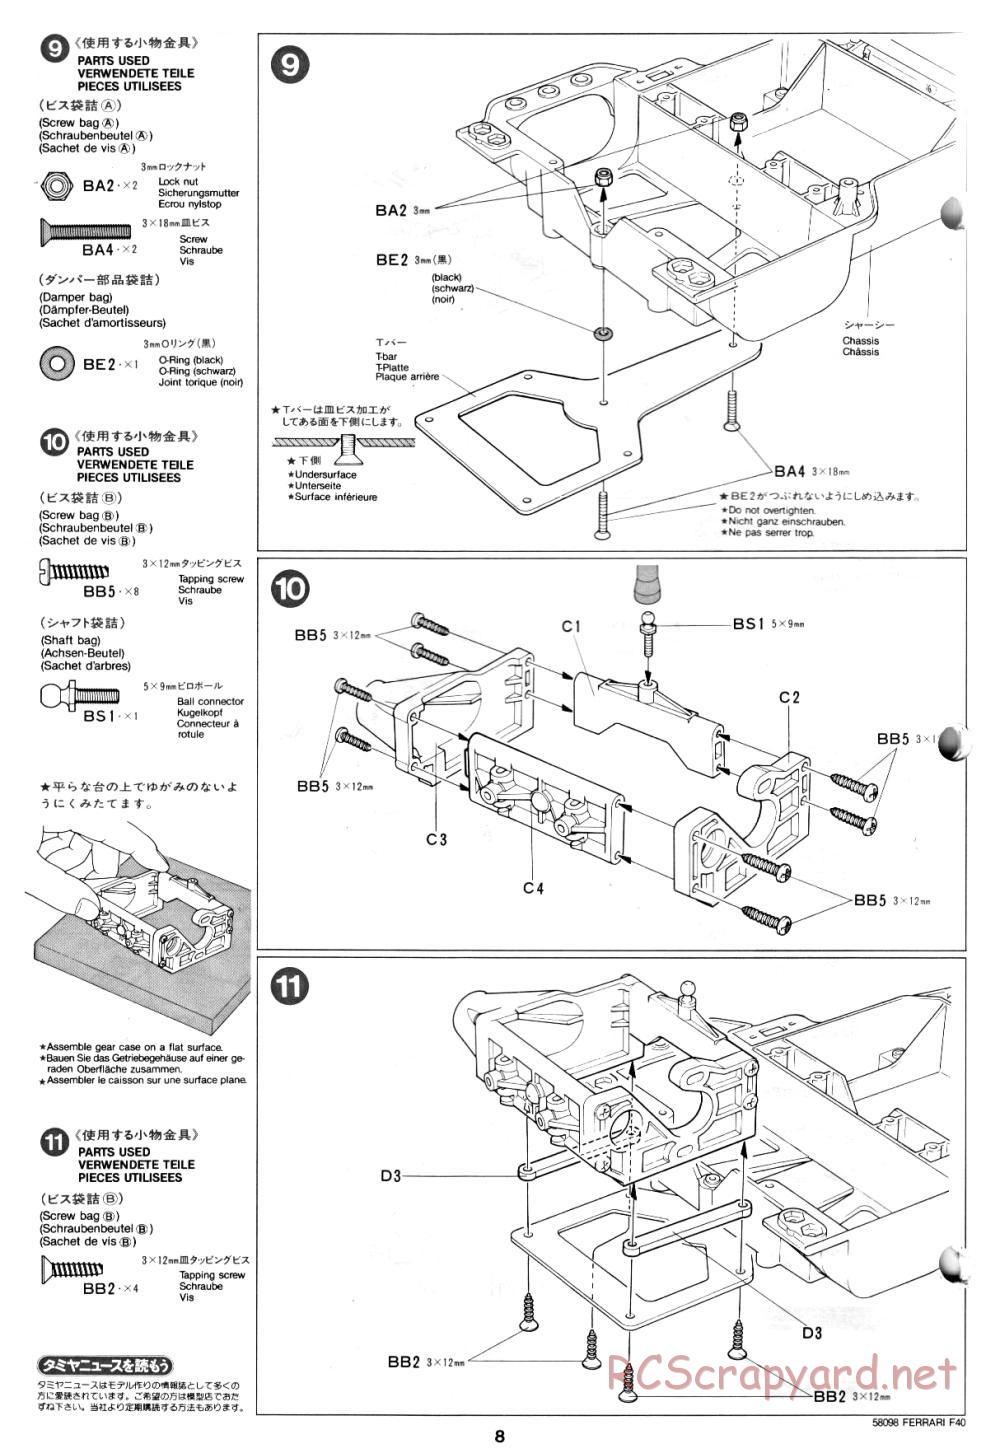 Tamiya - Ferrari F40 - 58098 - Manual - Page 8